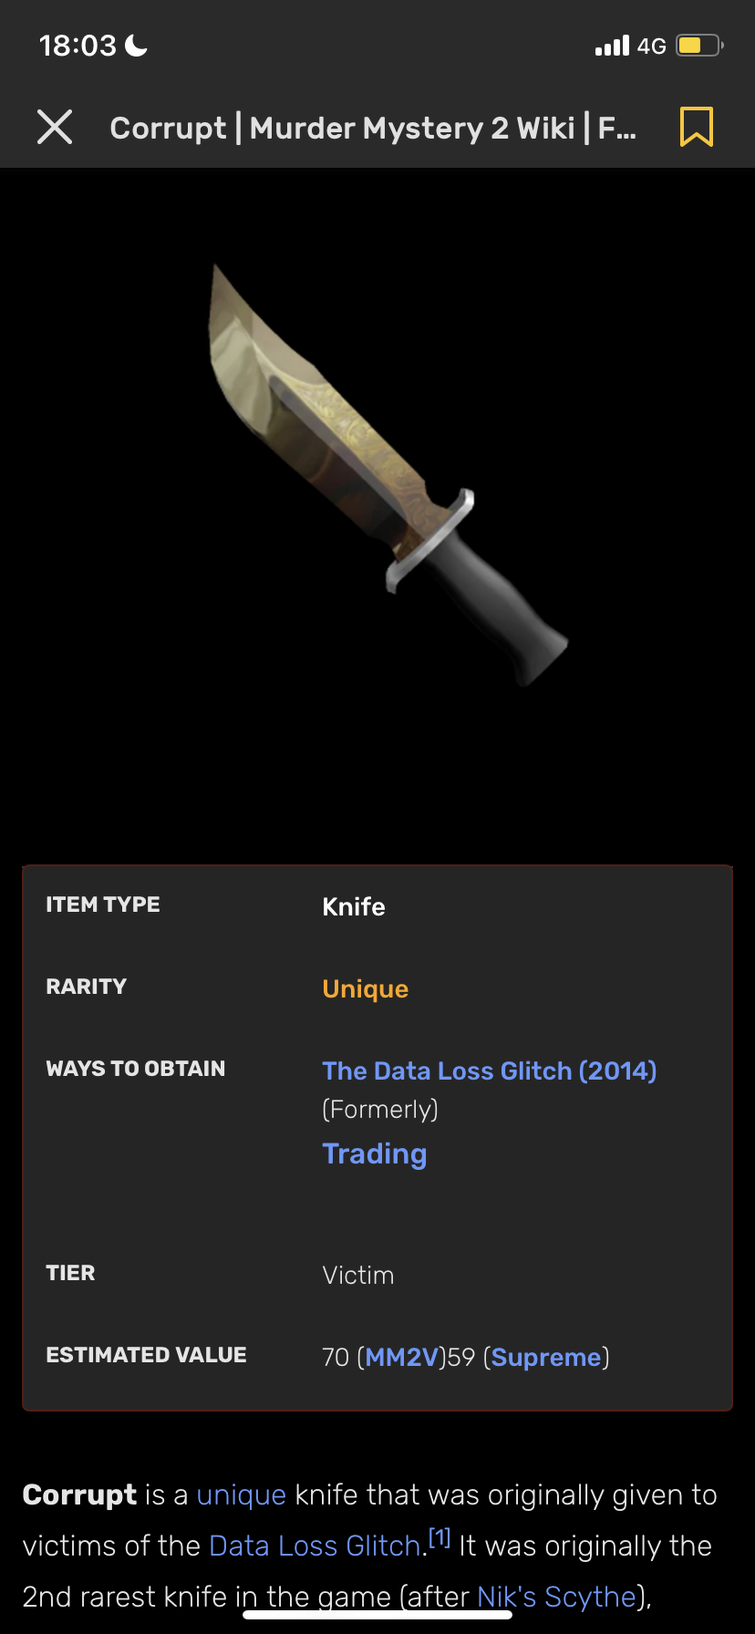 Classic Knife, Murder Mystery 2 Wiki